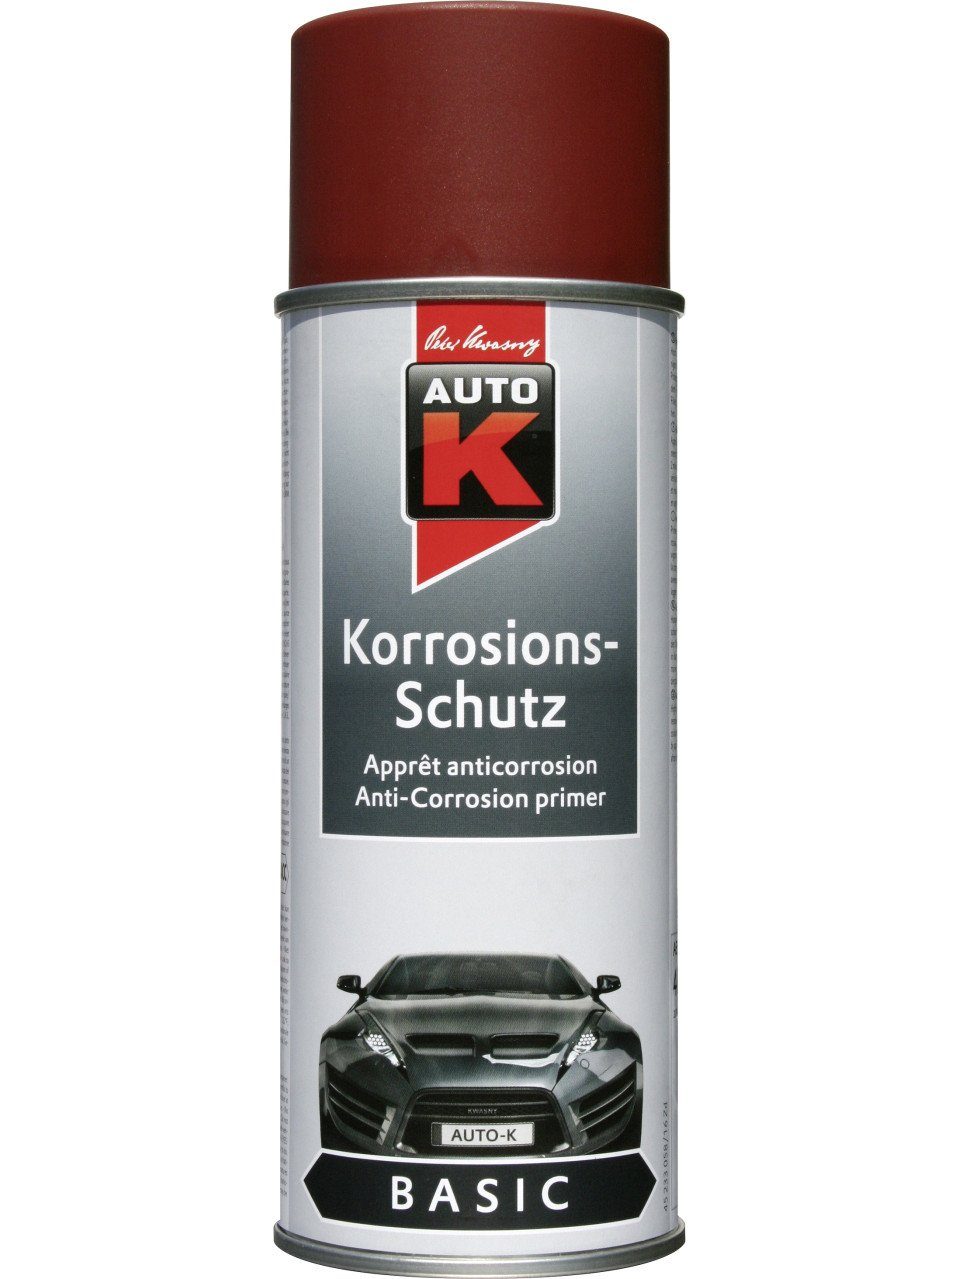 Auto-K Sprühlack Auto-K Korrosionsschutz Basic rotbraun 400ml | Sprühlacke